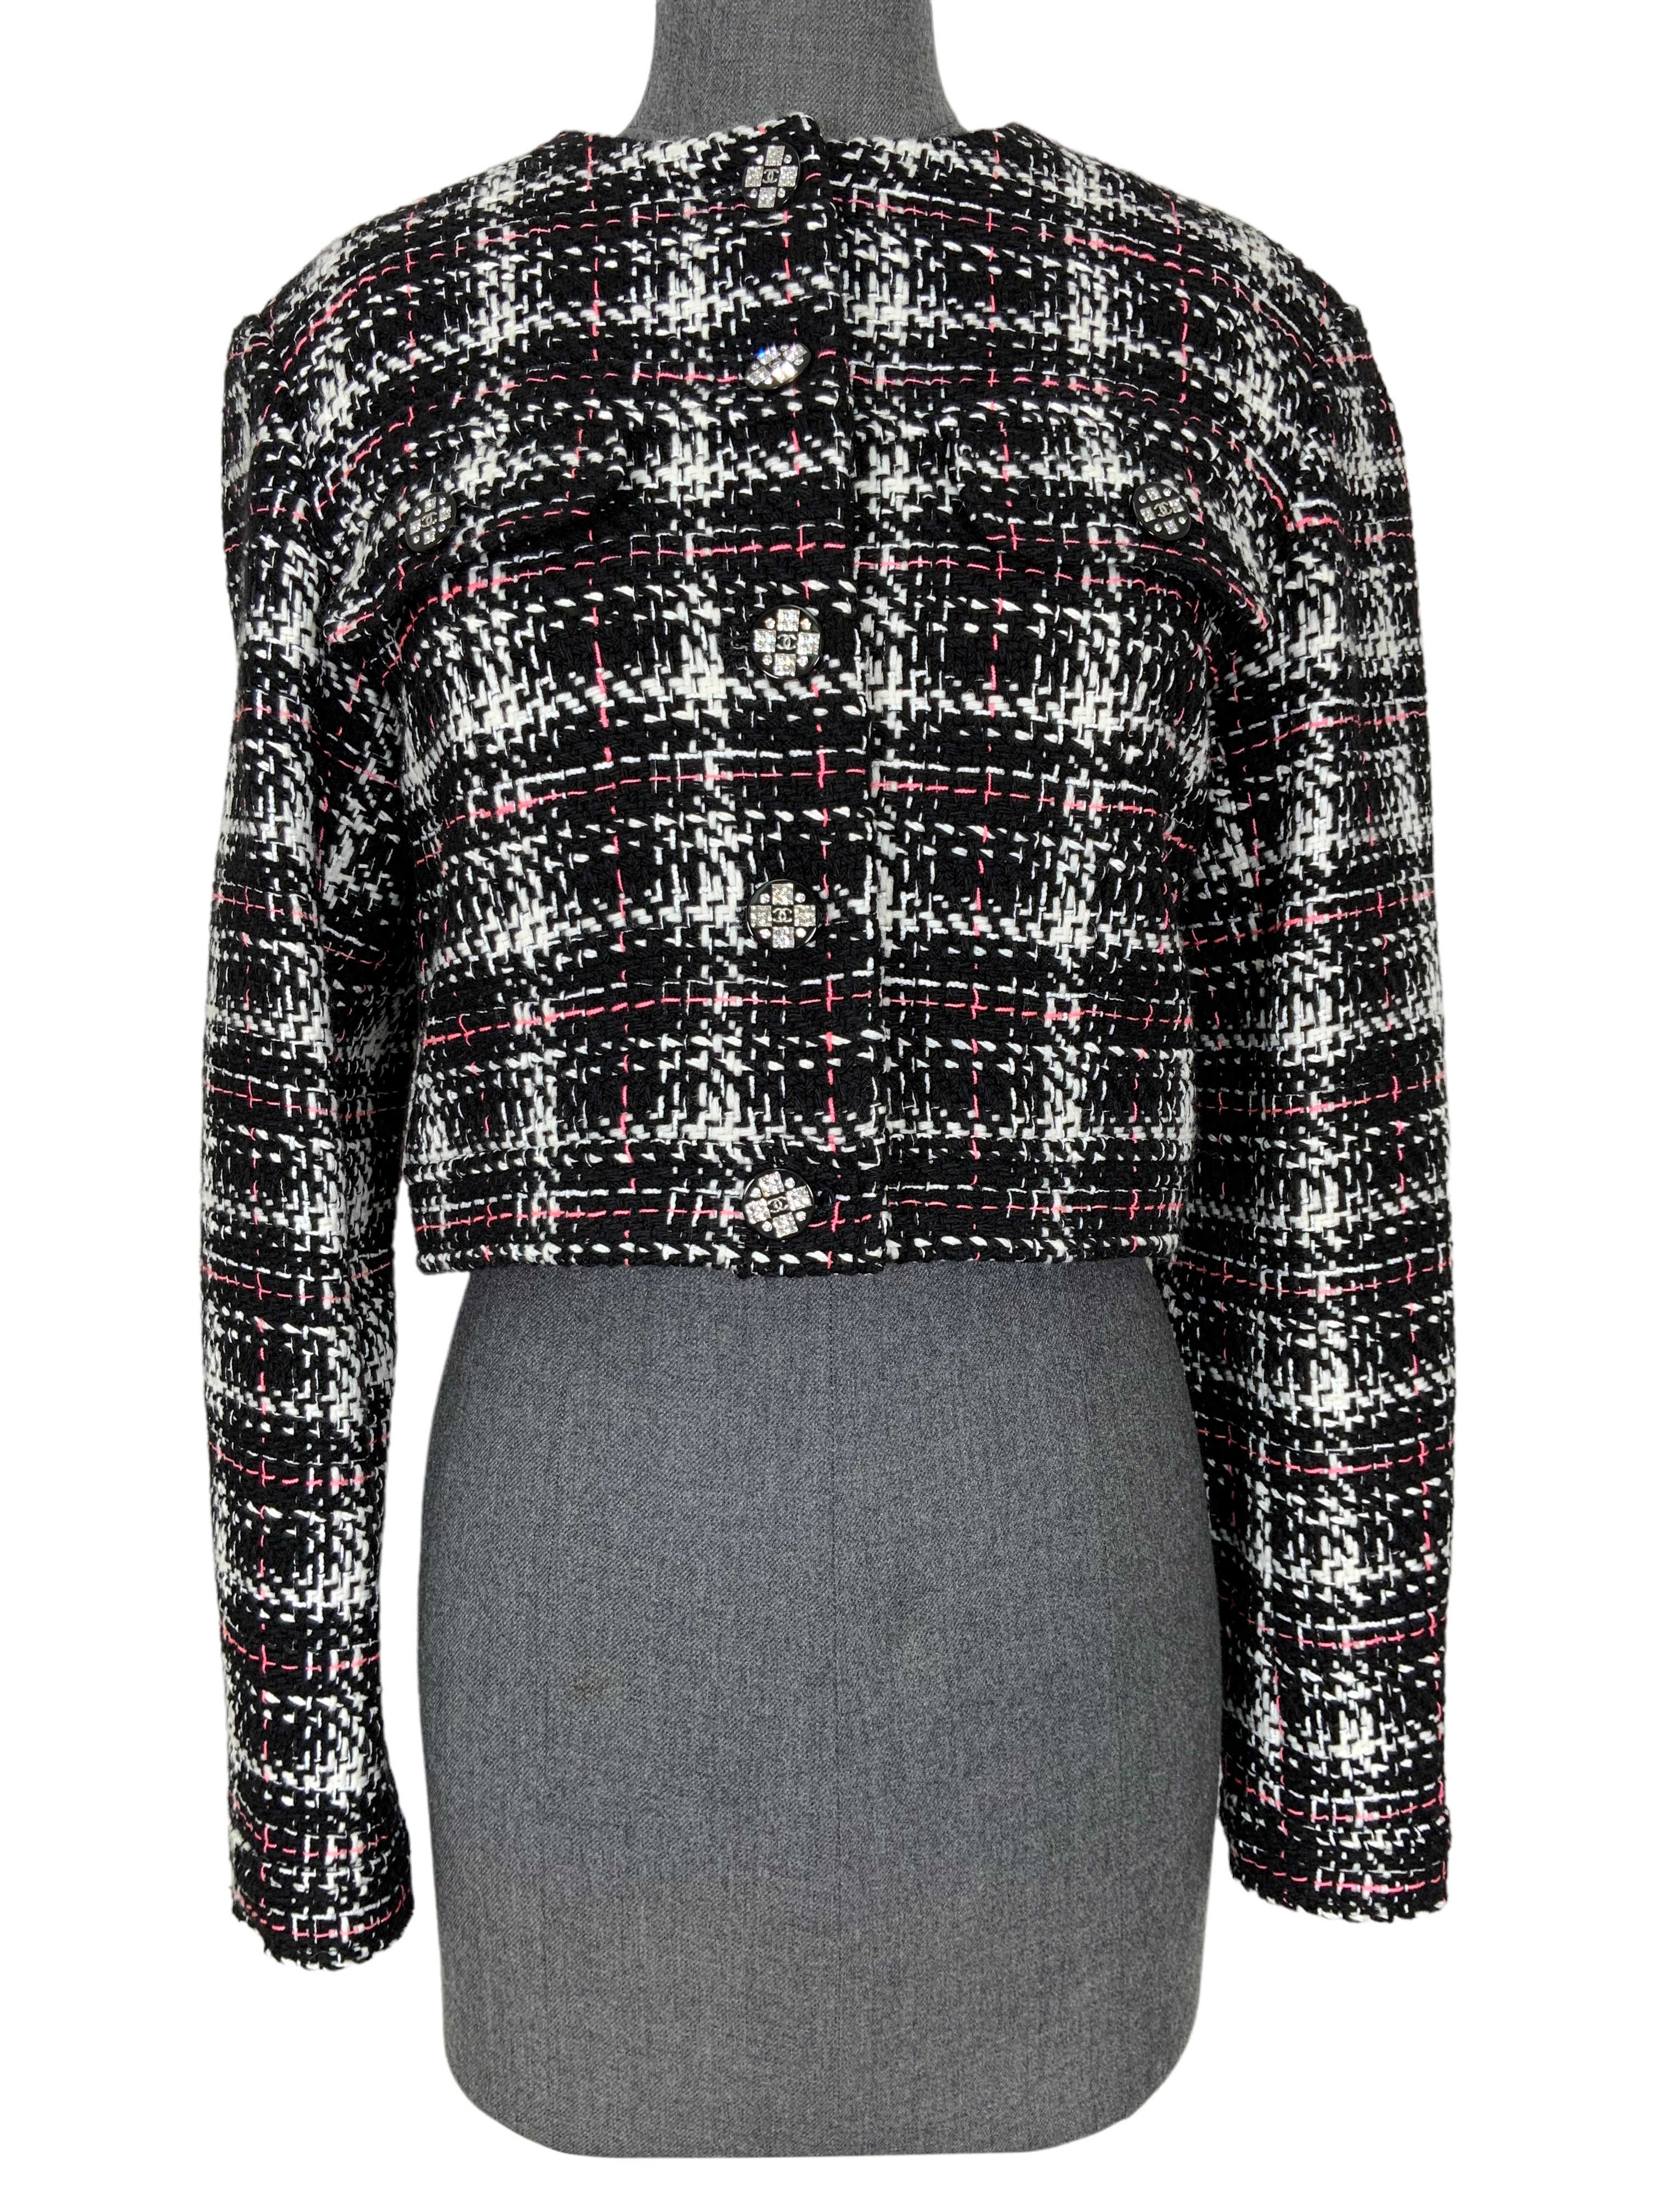 Chanel Tweed Cropped Jacket Size M